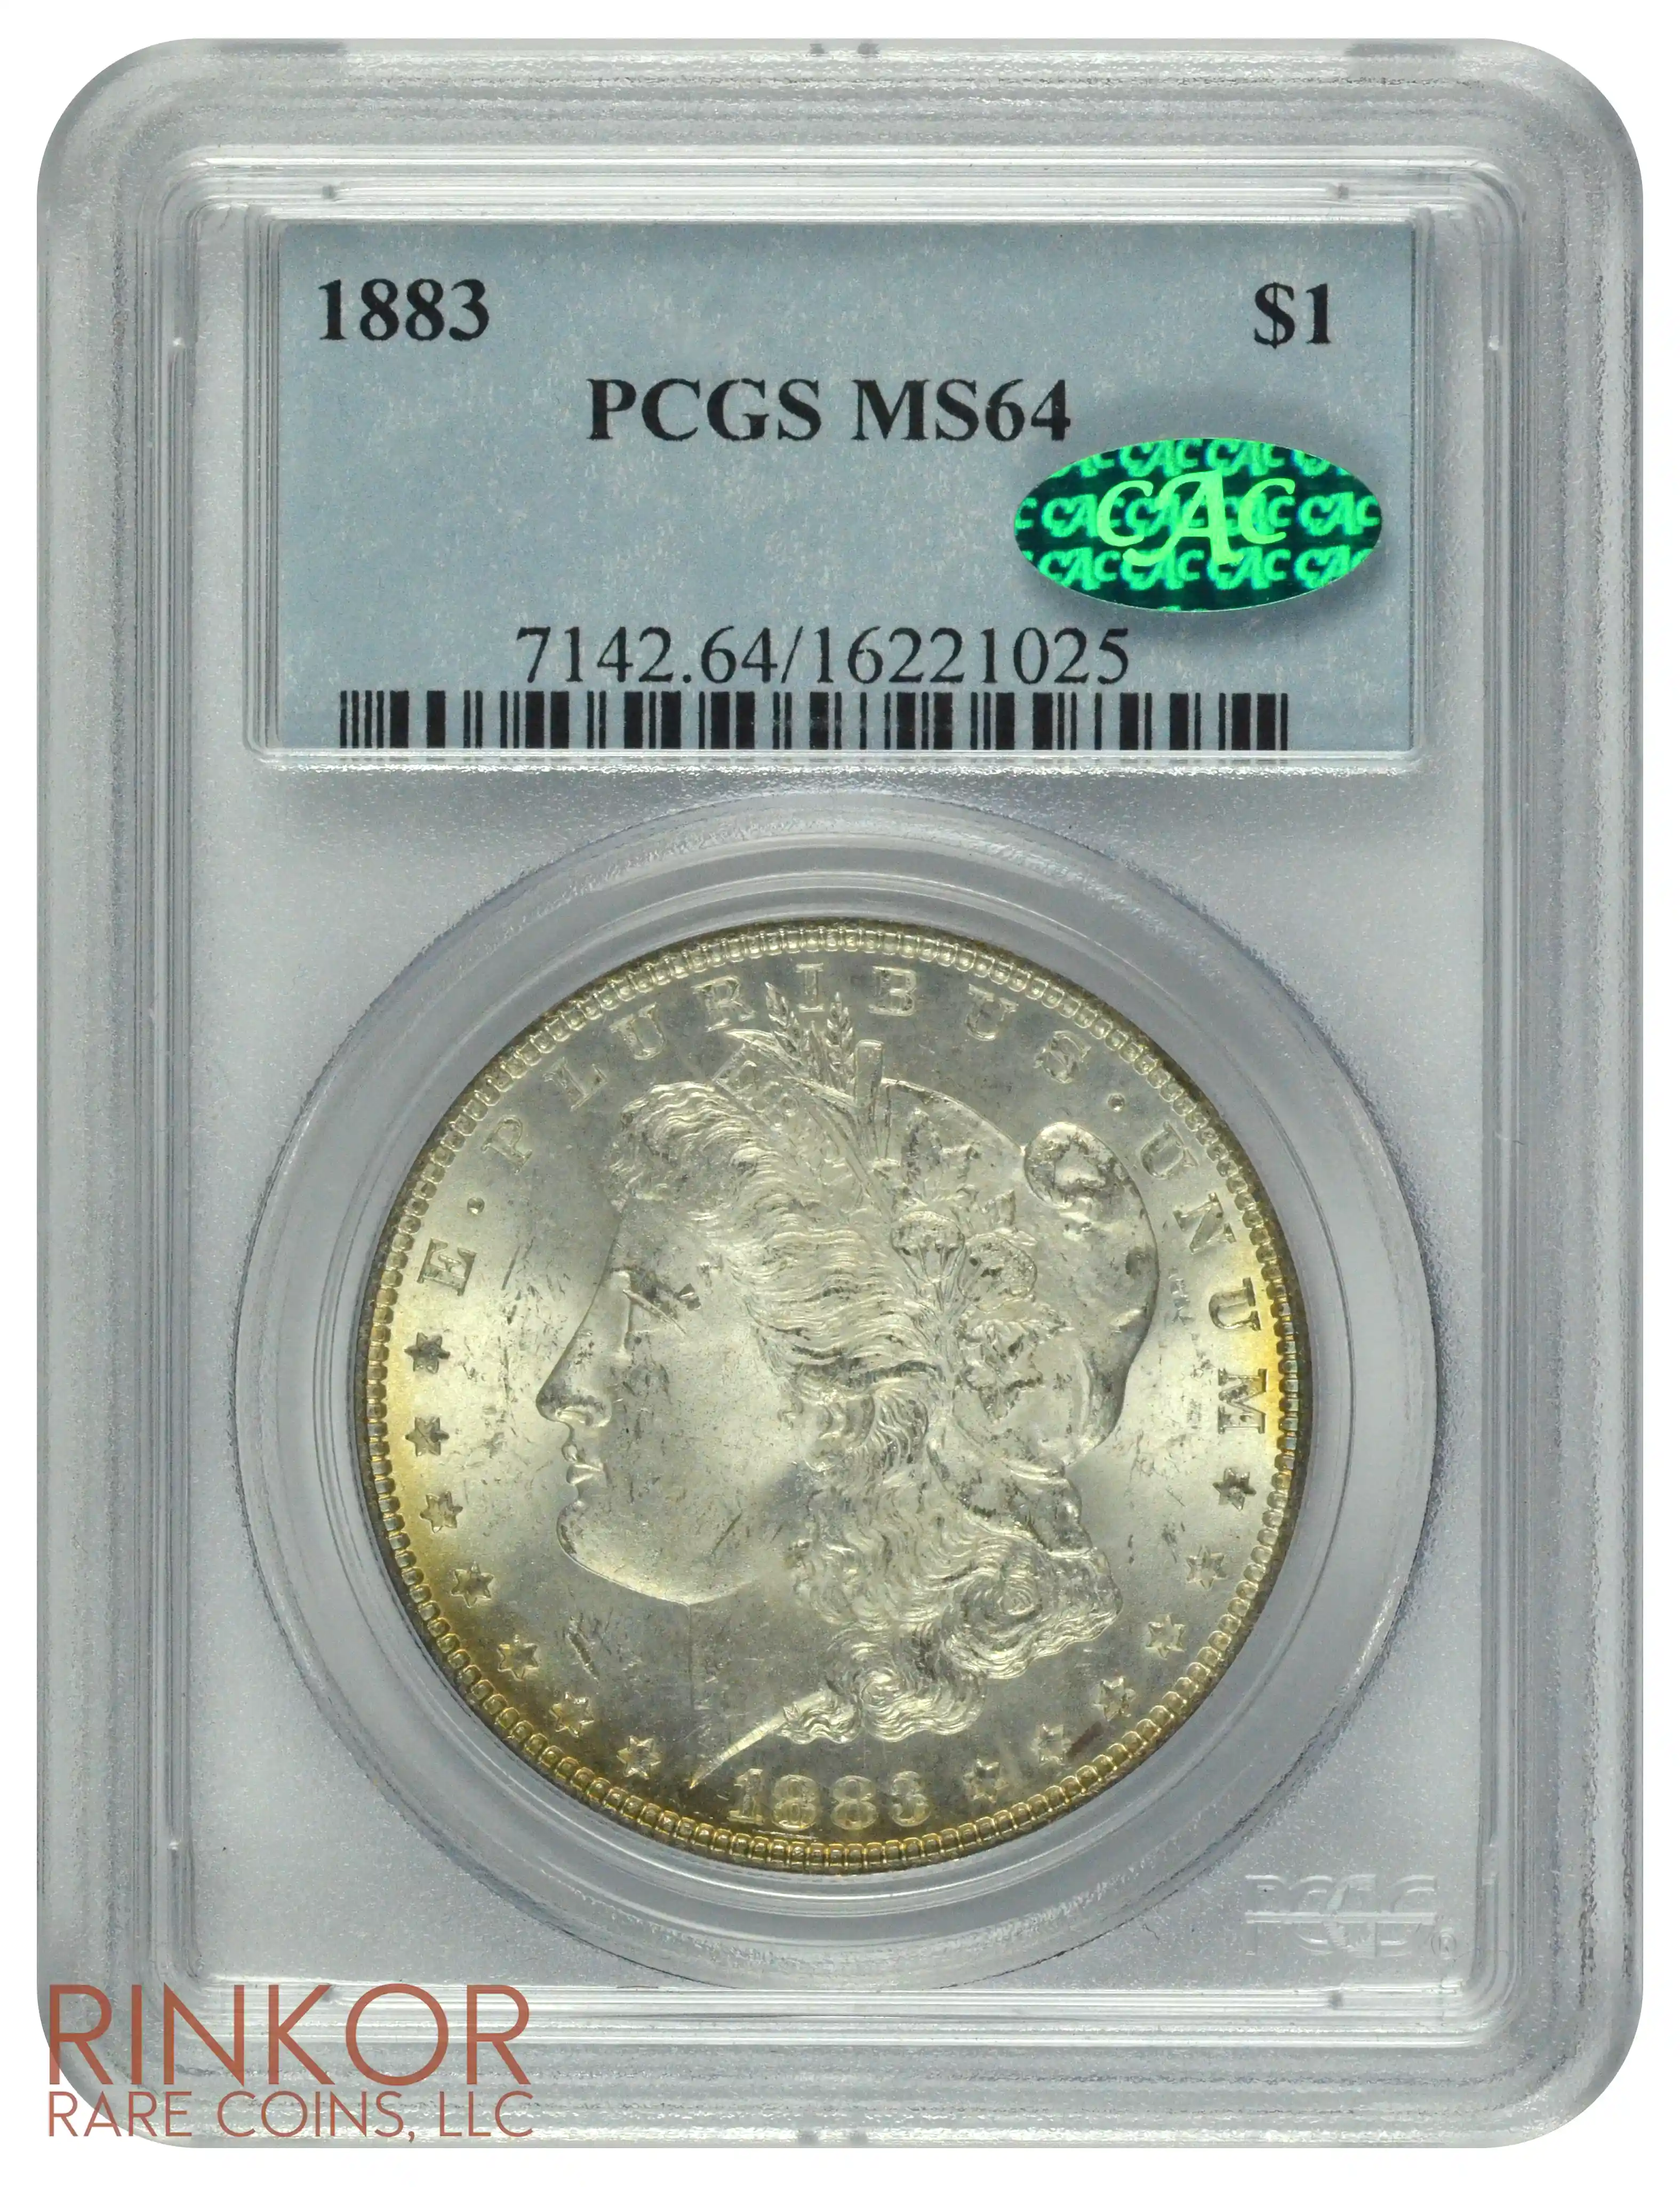 1883 $1 PCGS MS 64 CAC